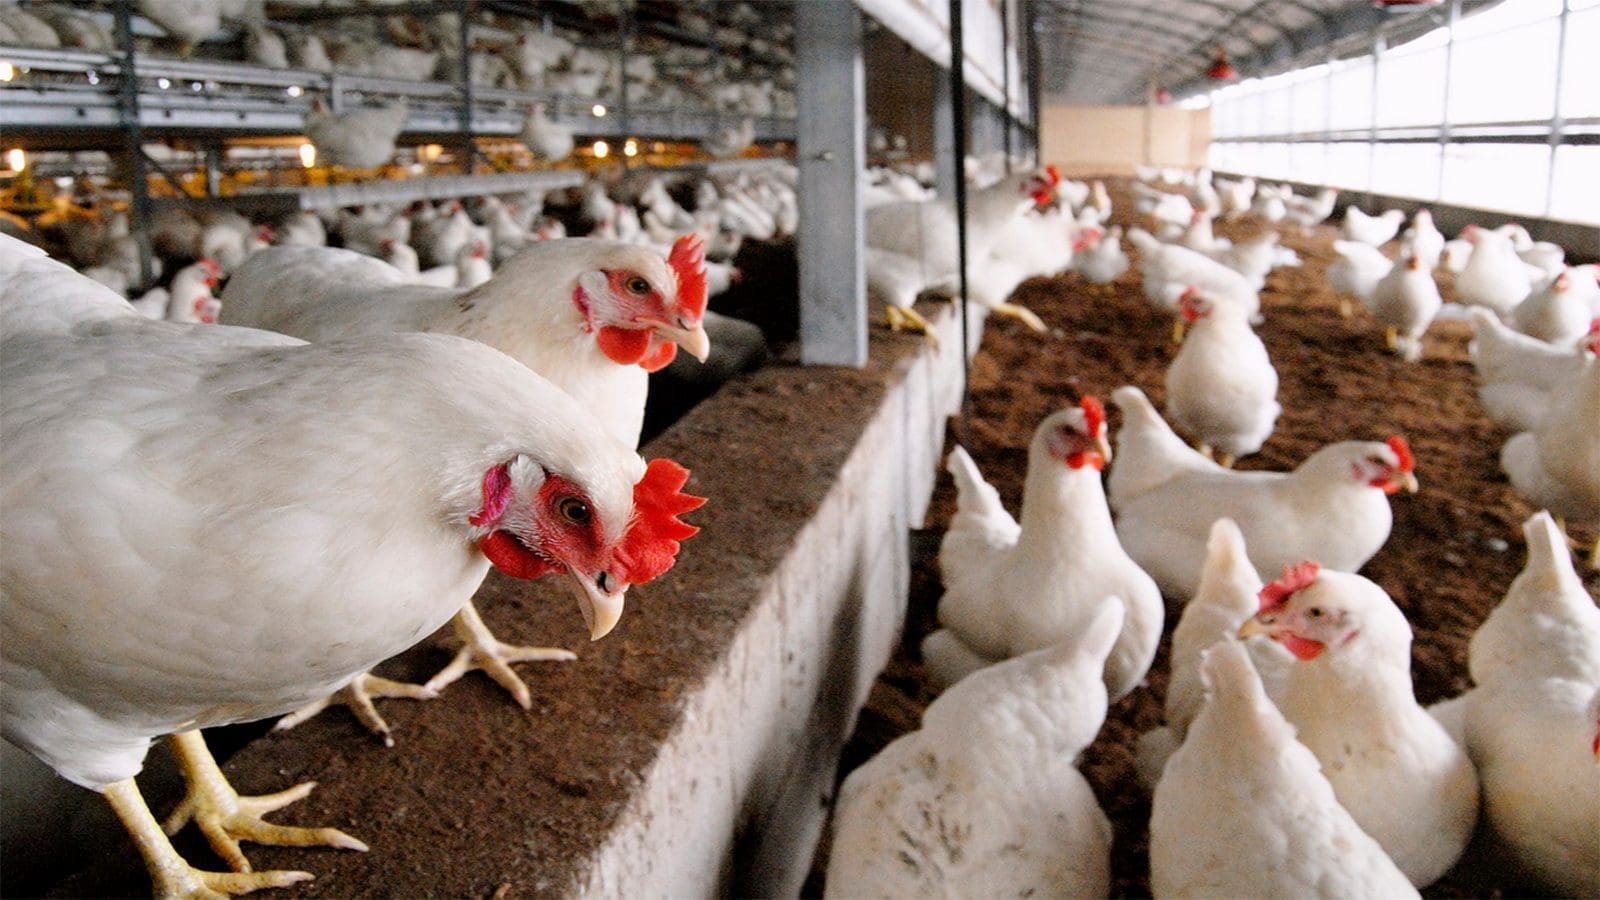 Avian flu outbreak necessitates culling of 48 million birds in UK, EU